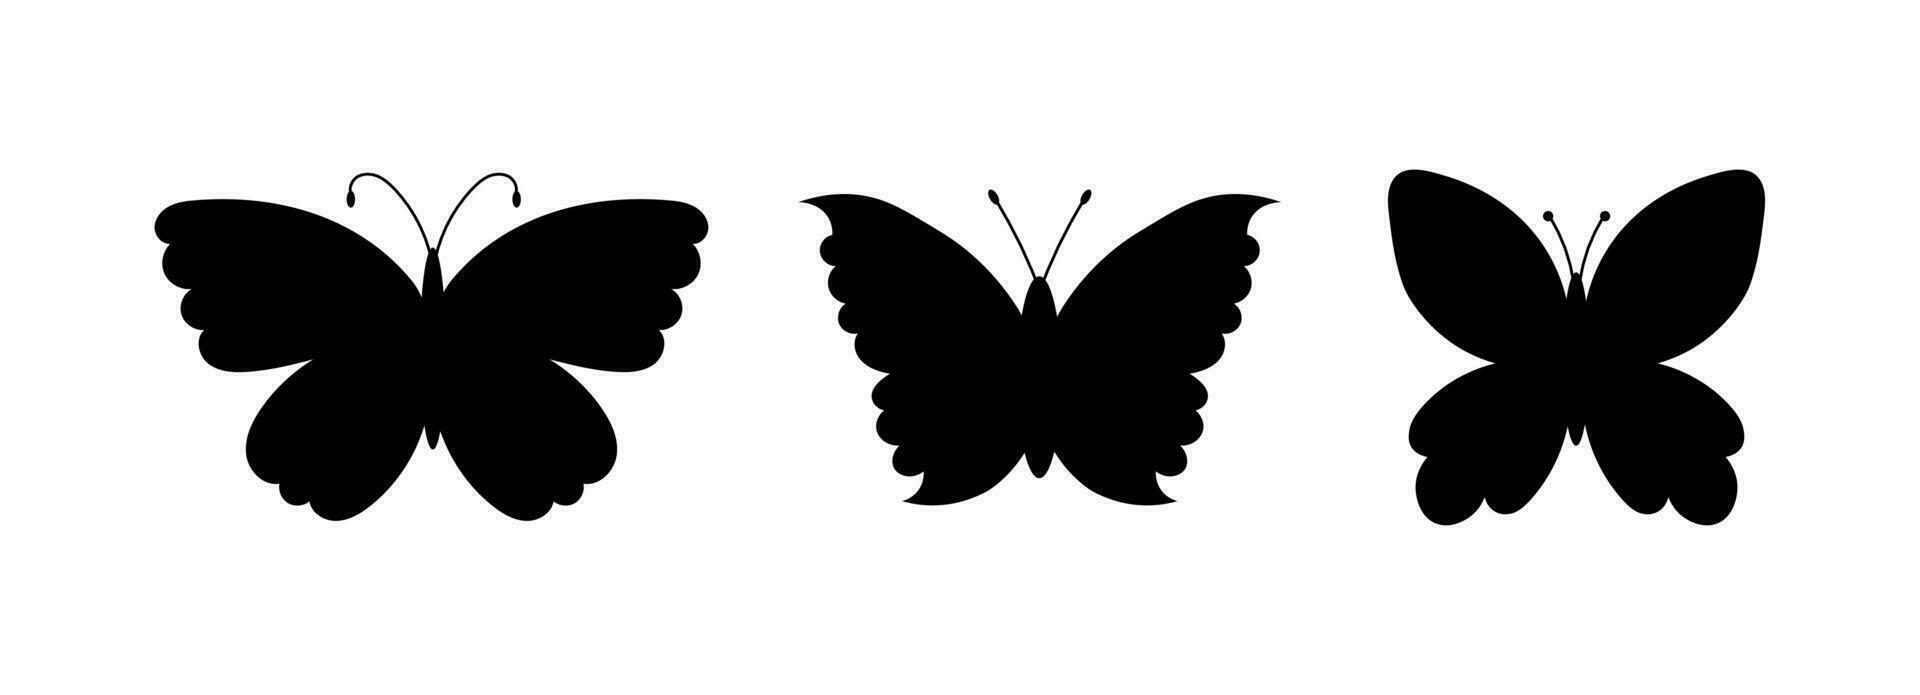 vlinder zwart silhouet reeks vector